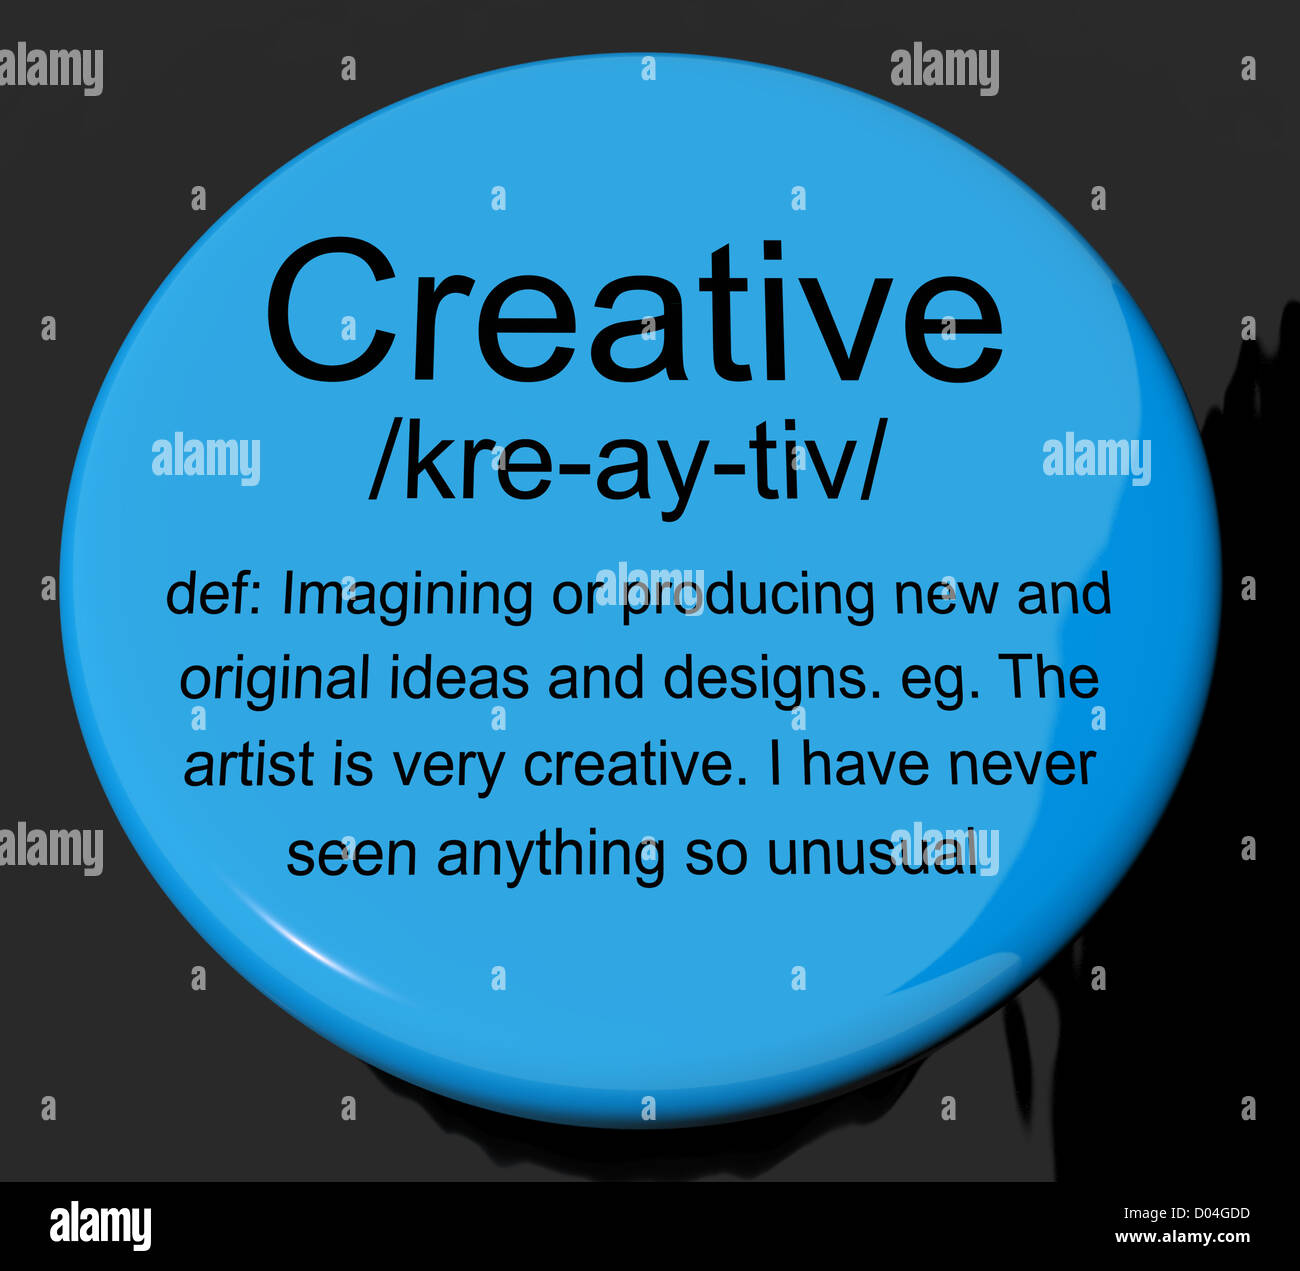 Creative Definition Button Shows Original Ideas Or Artistic Designs Stock Photo